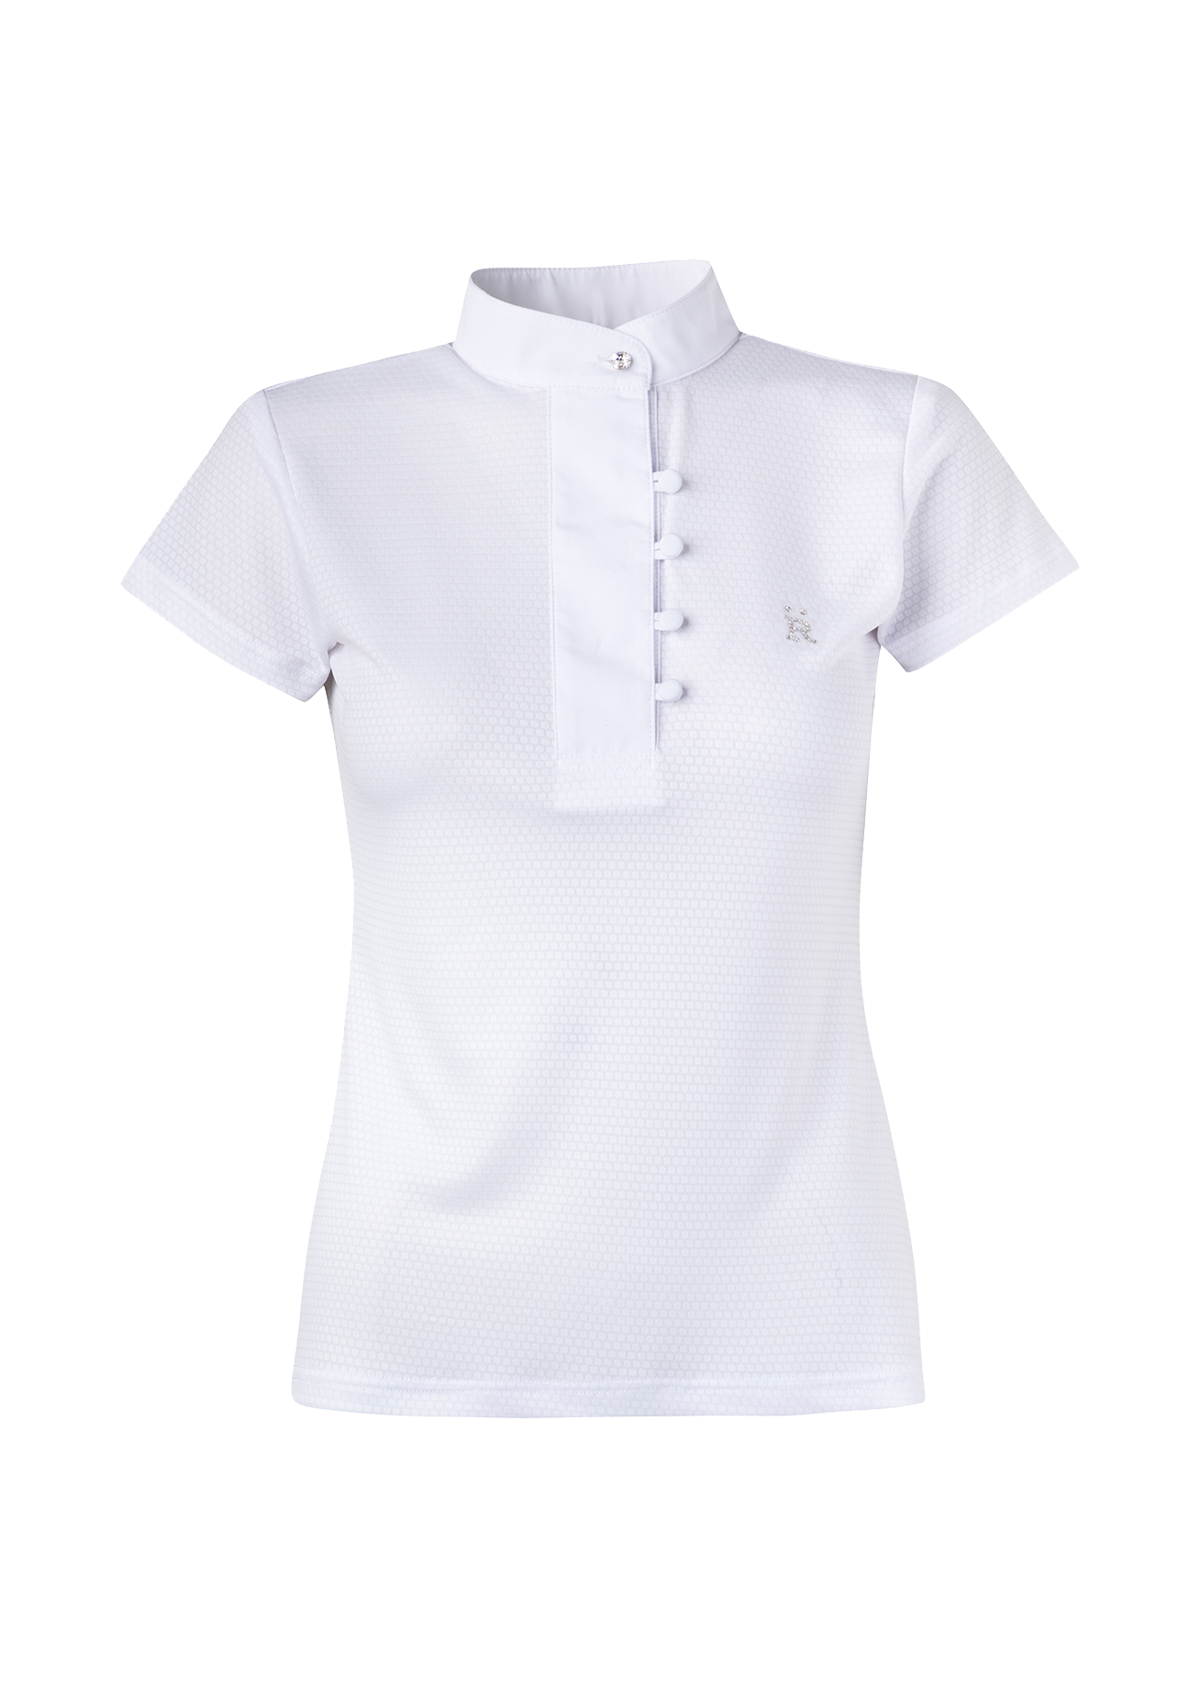 Perla Show Shirt | White - Only One Left